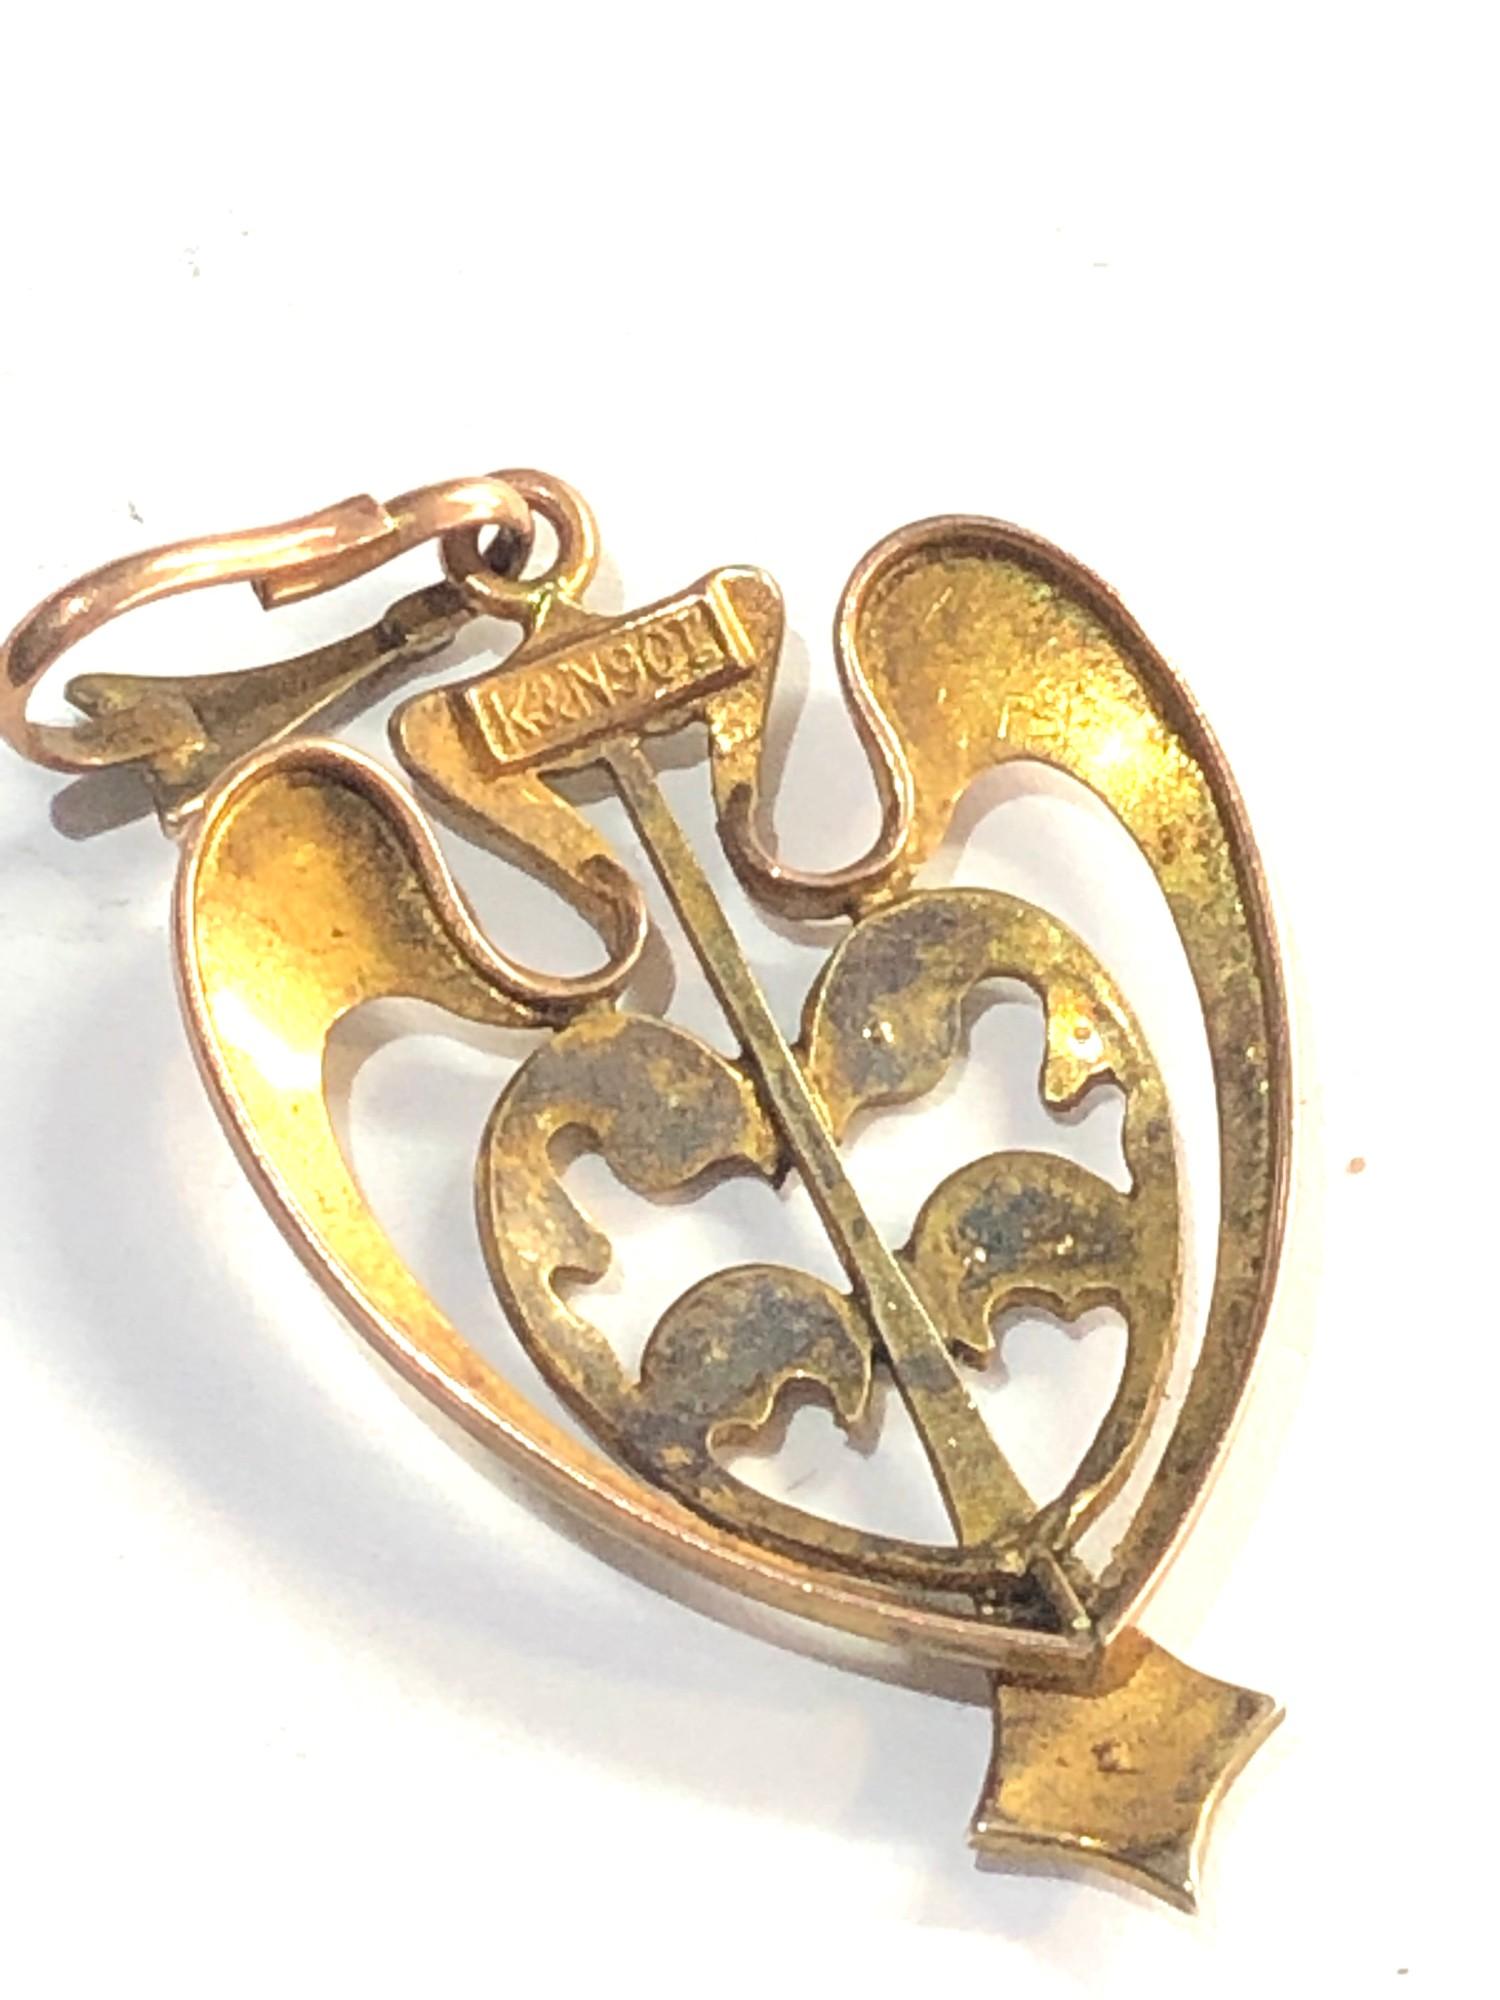 9ct Art Nouveau seed pearl pendant - Image 2 of 2